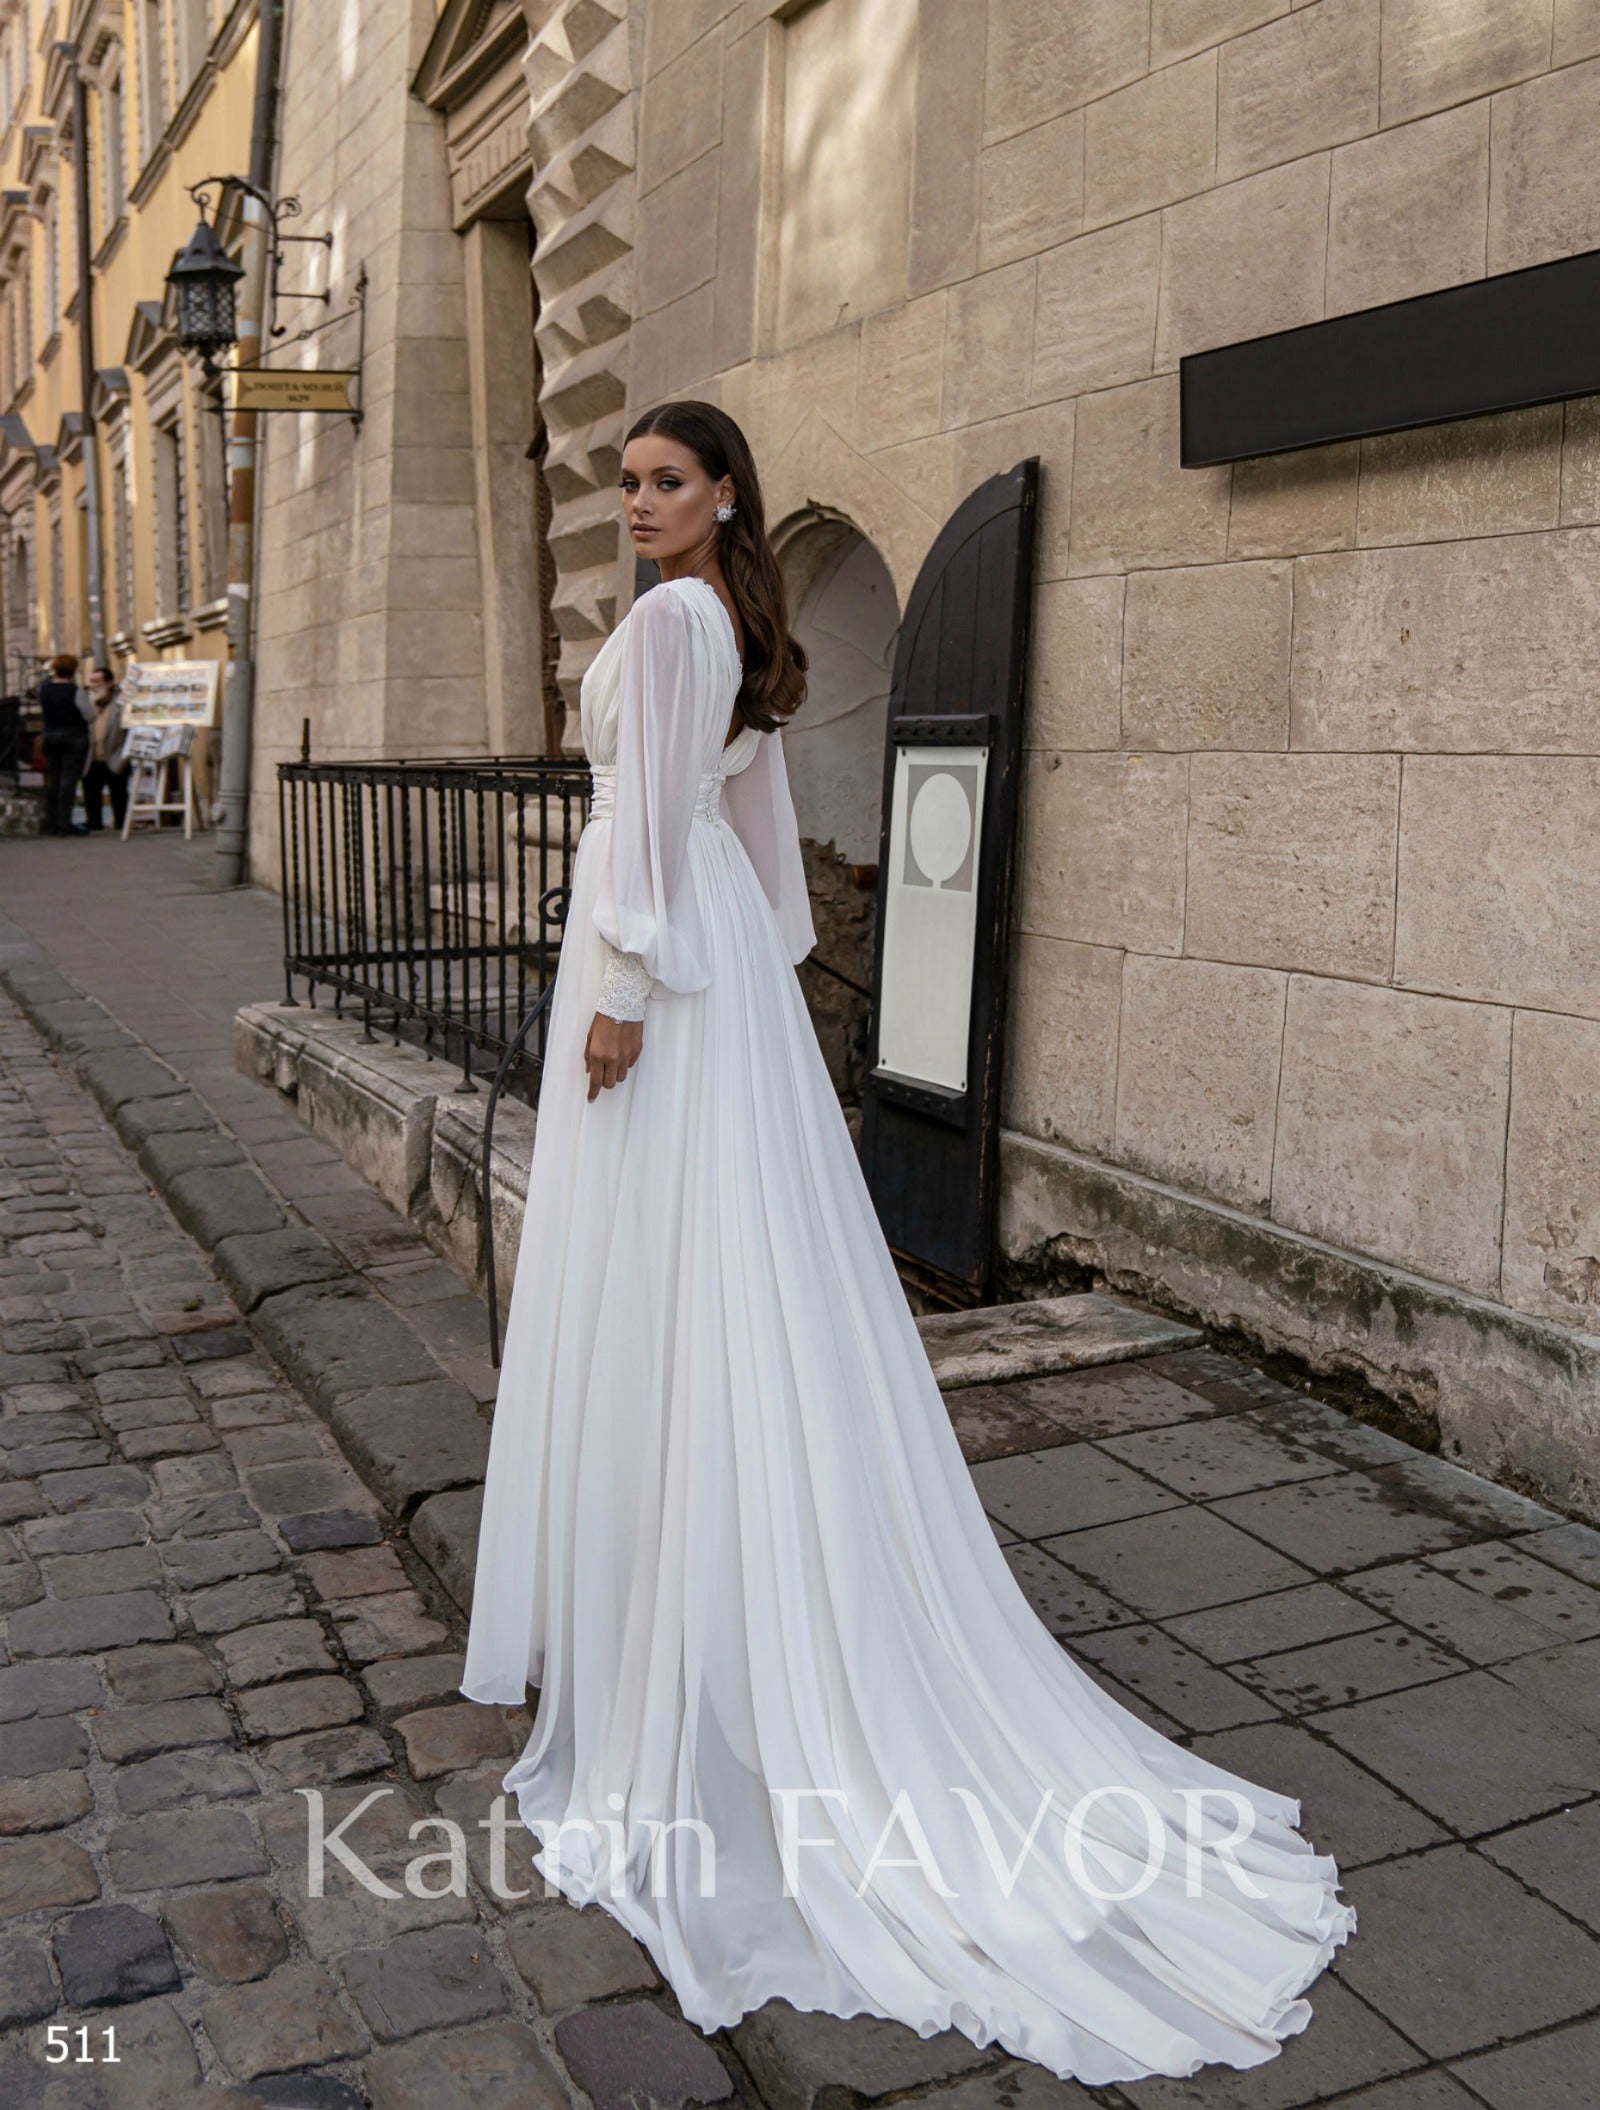 KatrinFAVORboutique-Minimalist chiffon wedding dress